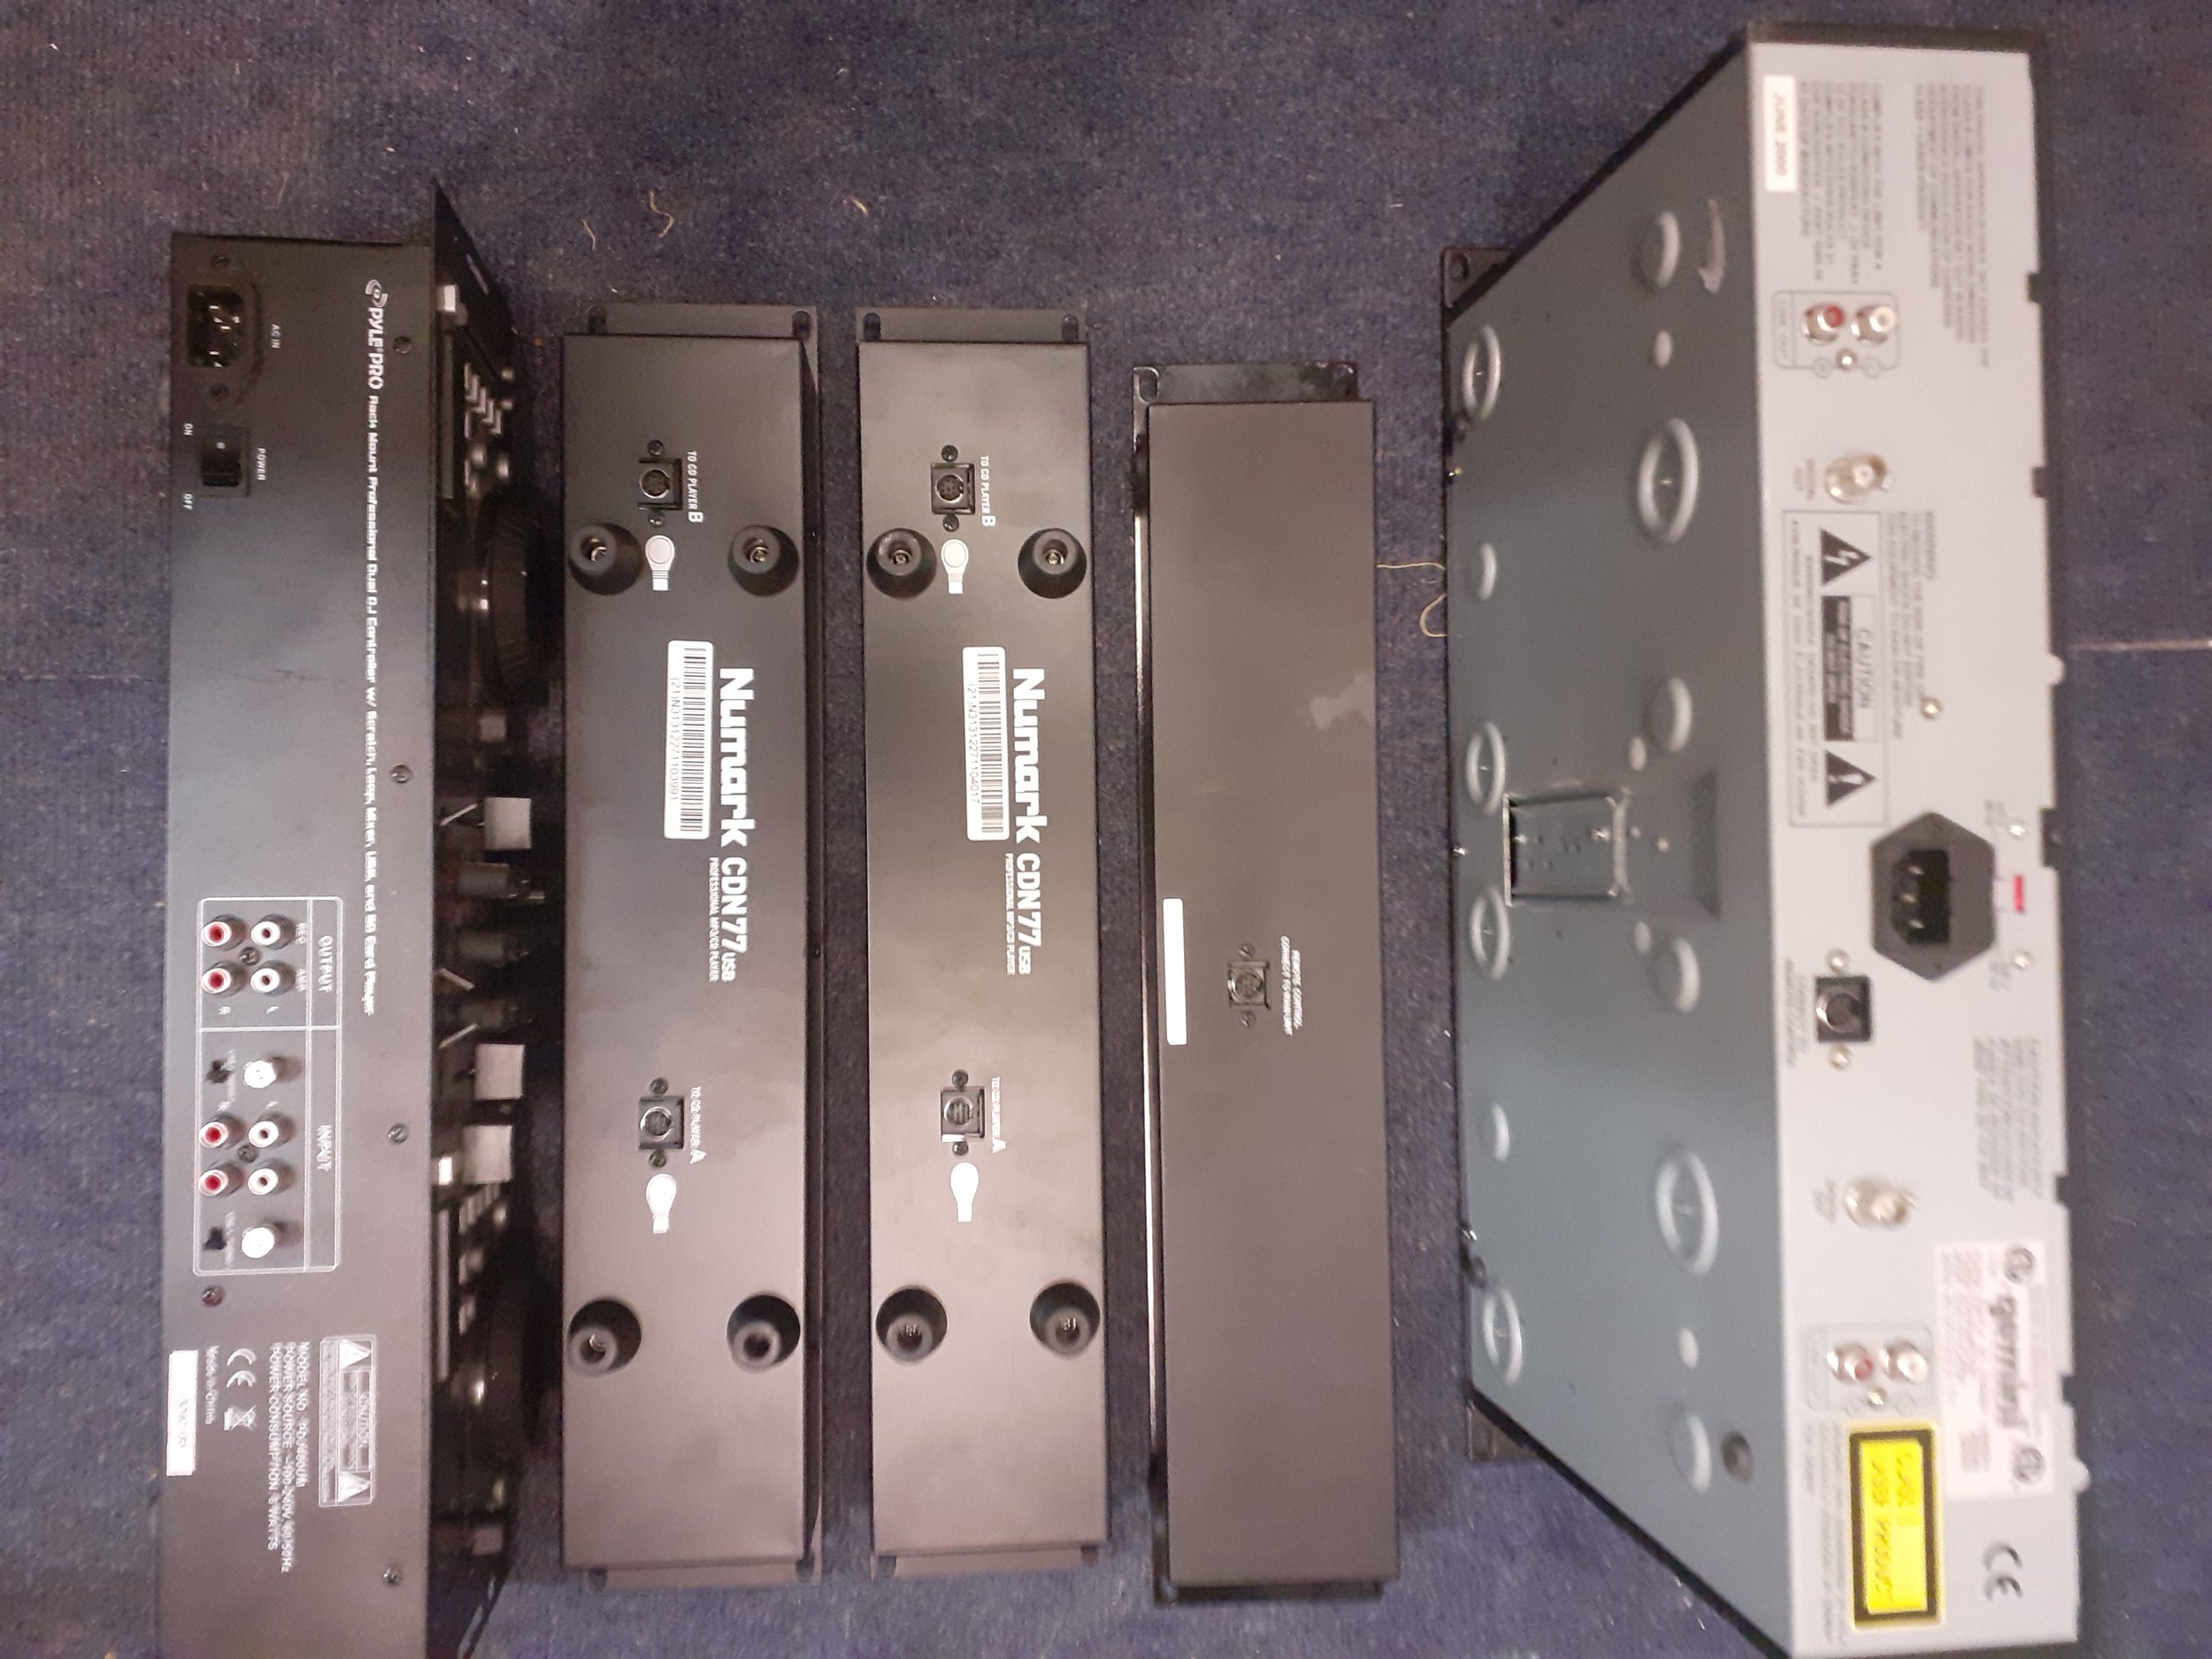 A Gemini CD-210 Professional dual CD player, 2 Numark CDN77 USB Professional MP3/CD players and a - Image 4 of 4